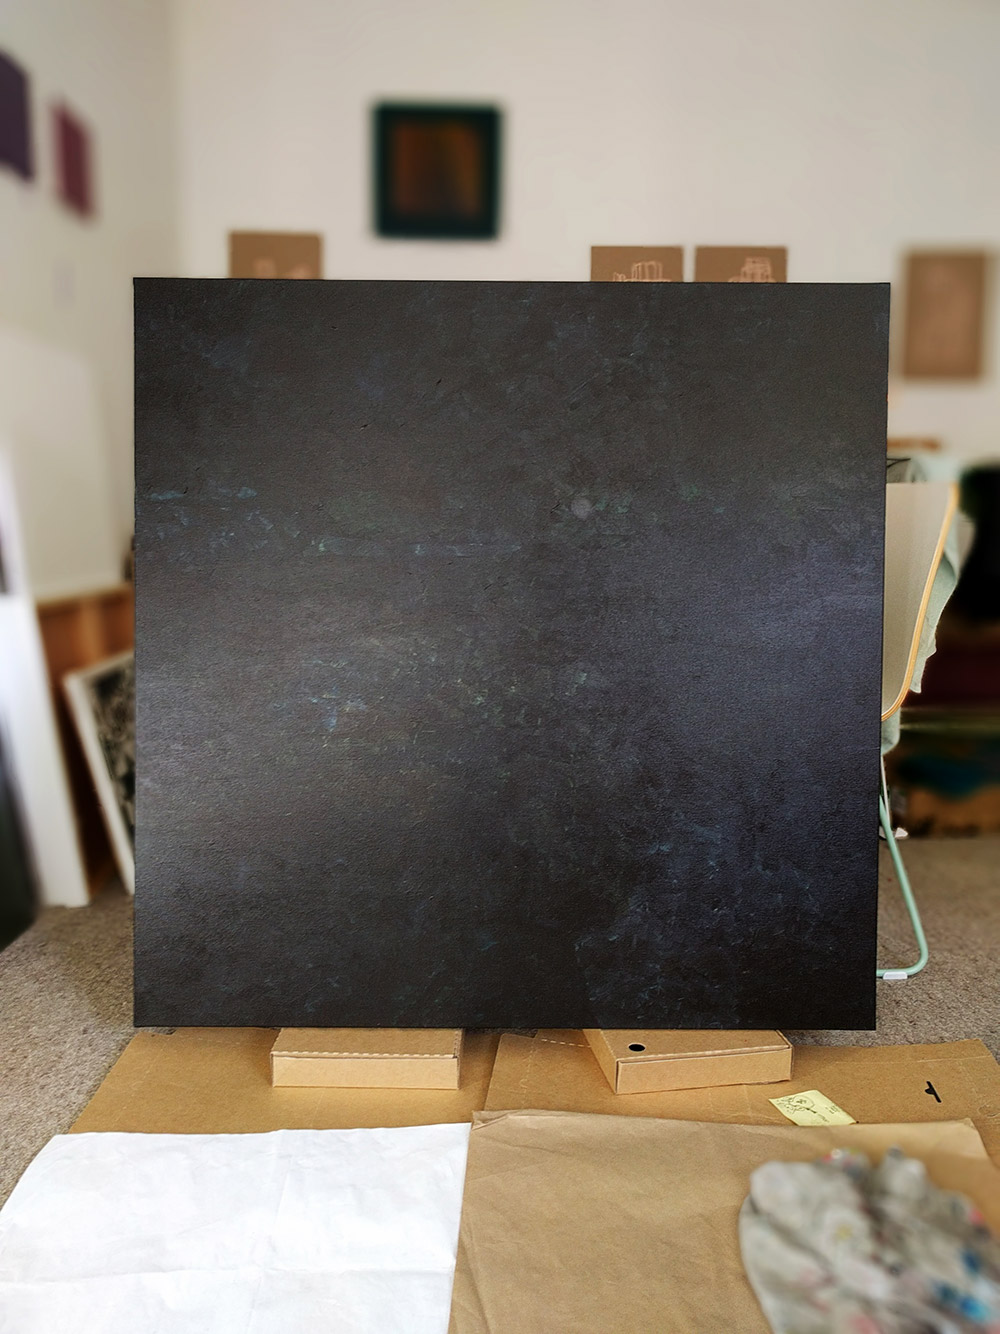 Work in progress - "black" monochrome painting.